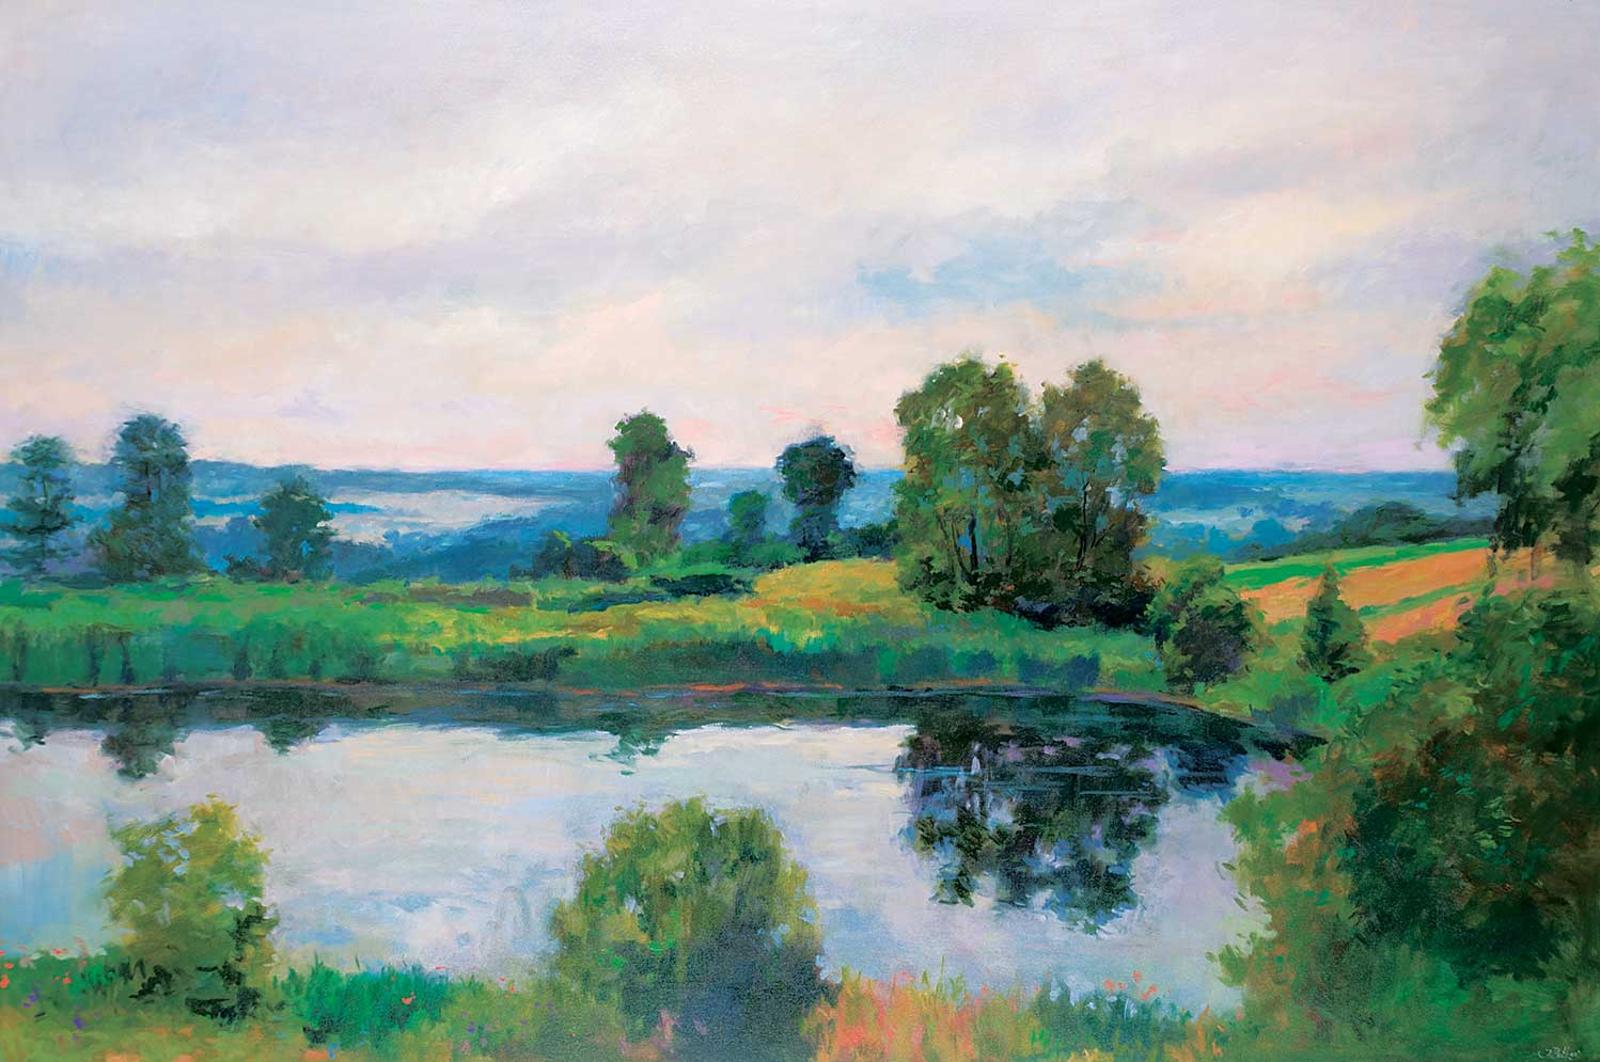 Joro Petkov (1960) - Untitled - Early Morning Pond